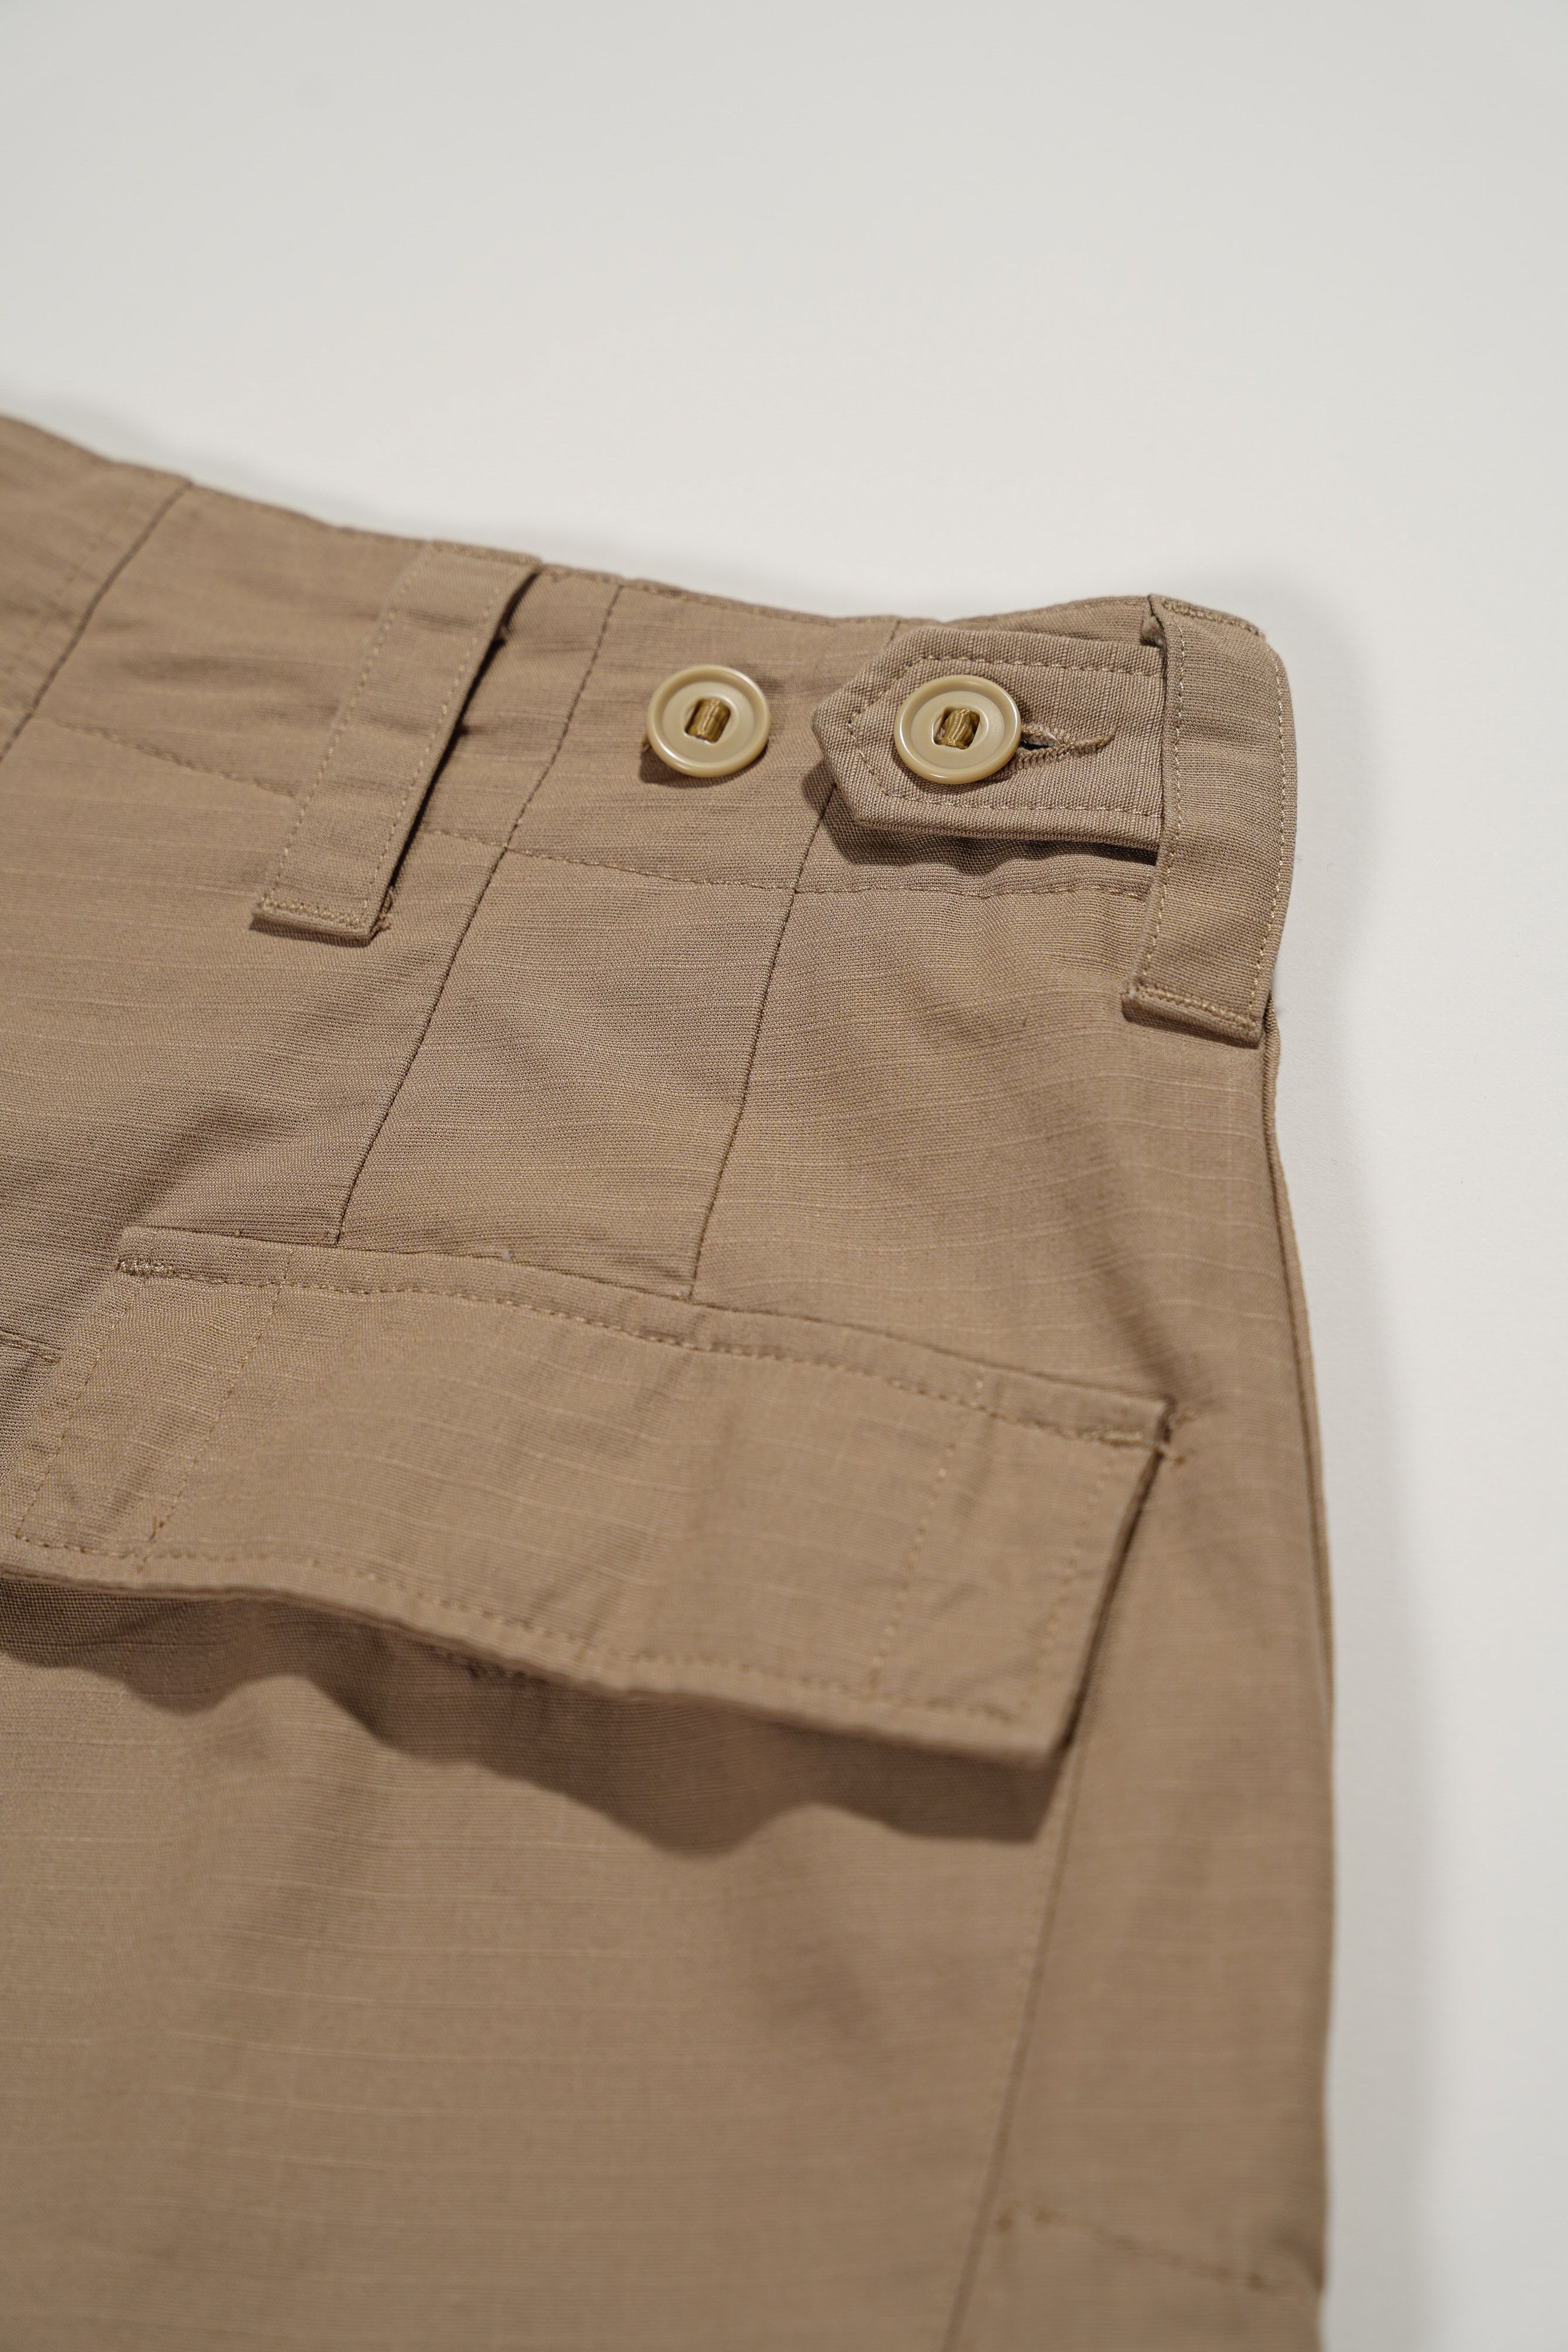 Engineered Garments Blank Label Royal Gaucho Pants - Khaki Cotton Ripstop